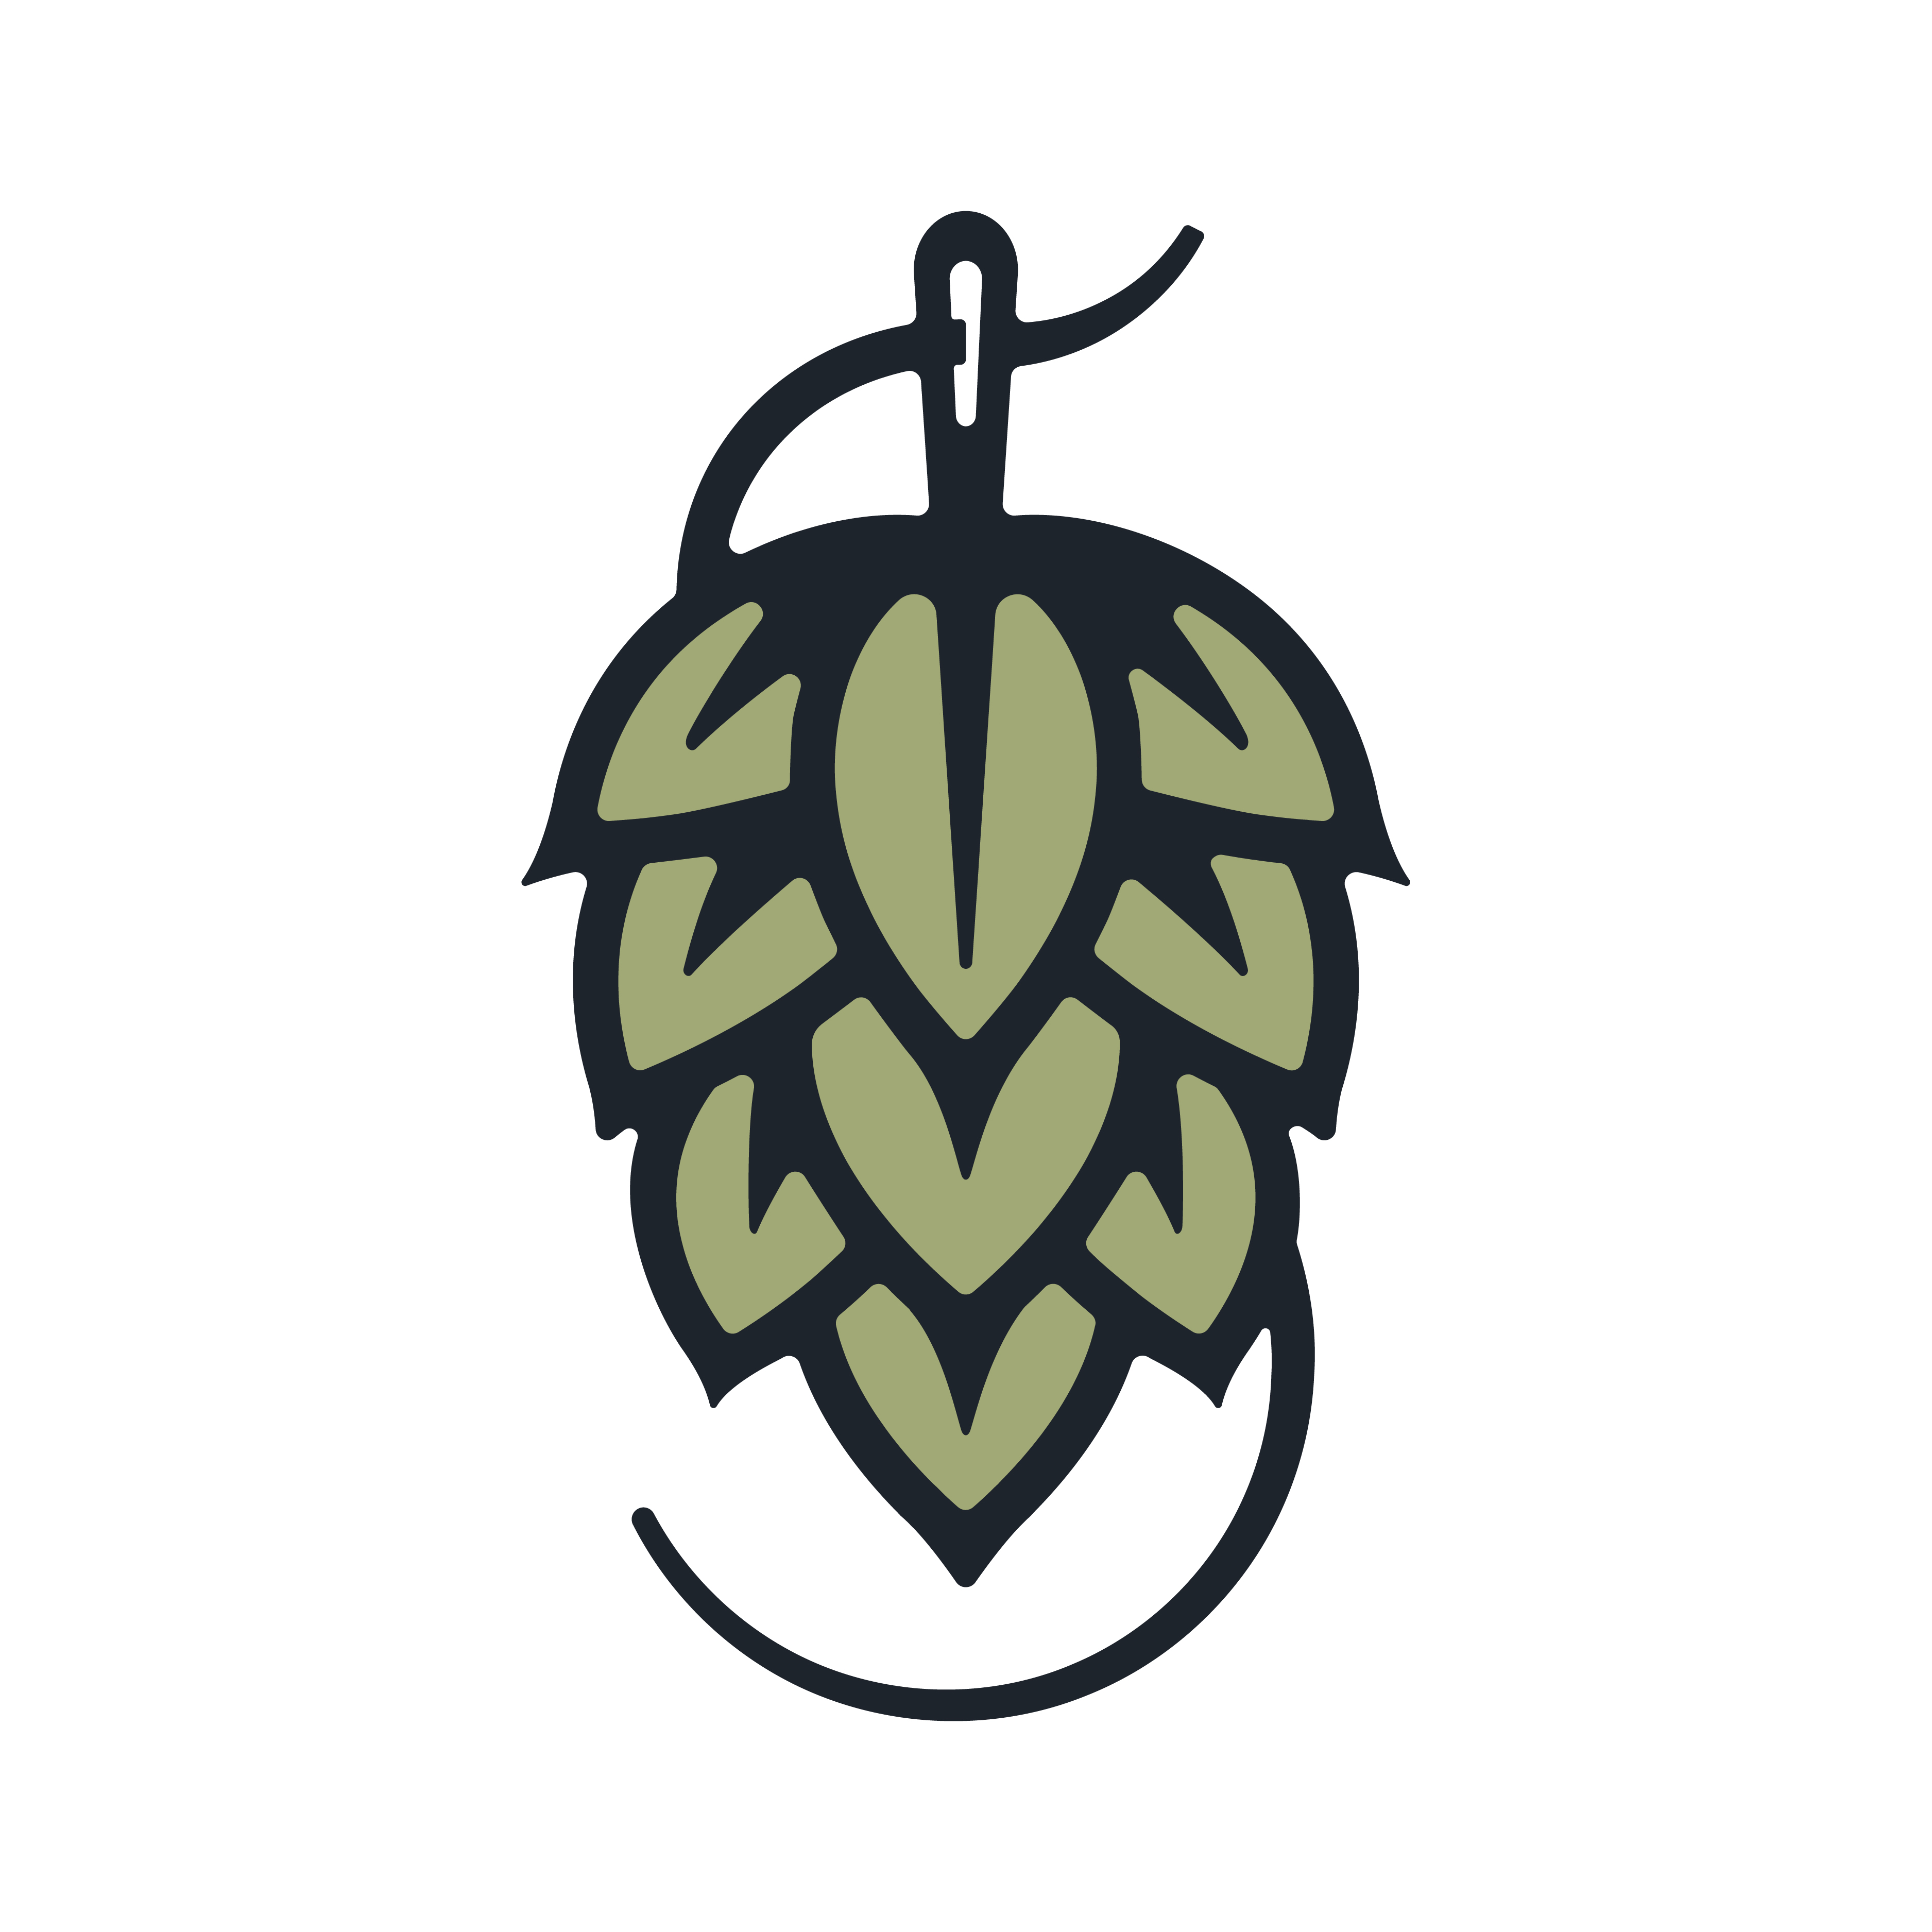 Bespoke Brewing - Hop logo design by logo designer Wandel Design for your inspiration and for the worlds largest logo competition